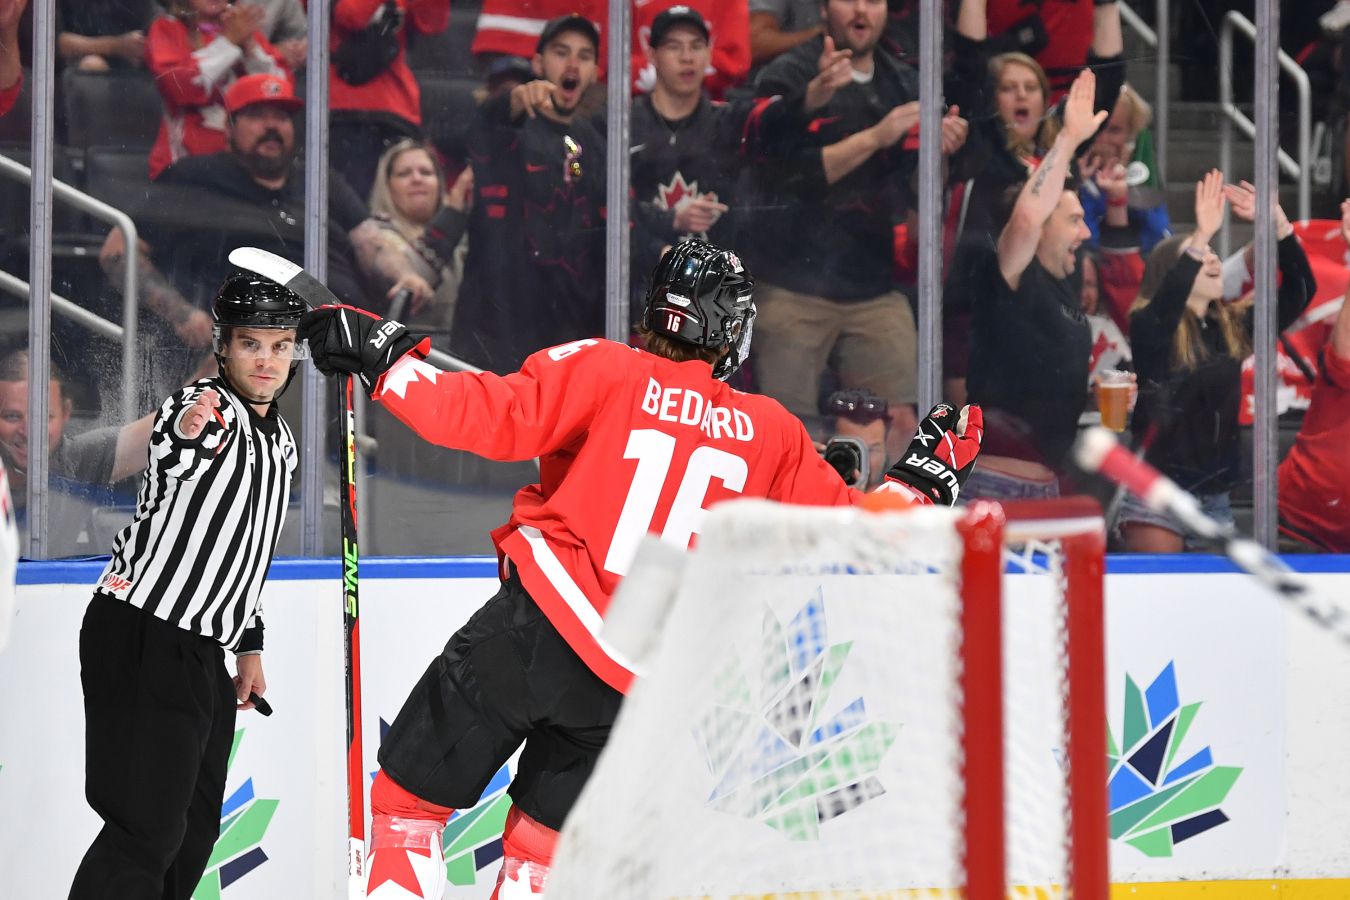 Итоги четвёртого игрового дня МЧМ-2023 по хоккею, Бедард установил рекорд Канады, видео, турнирная таблица